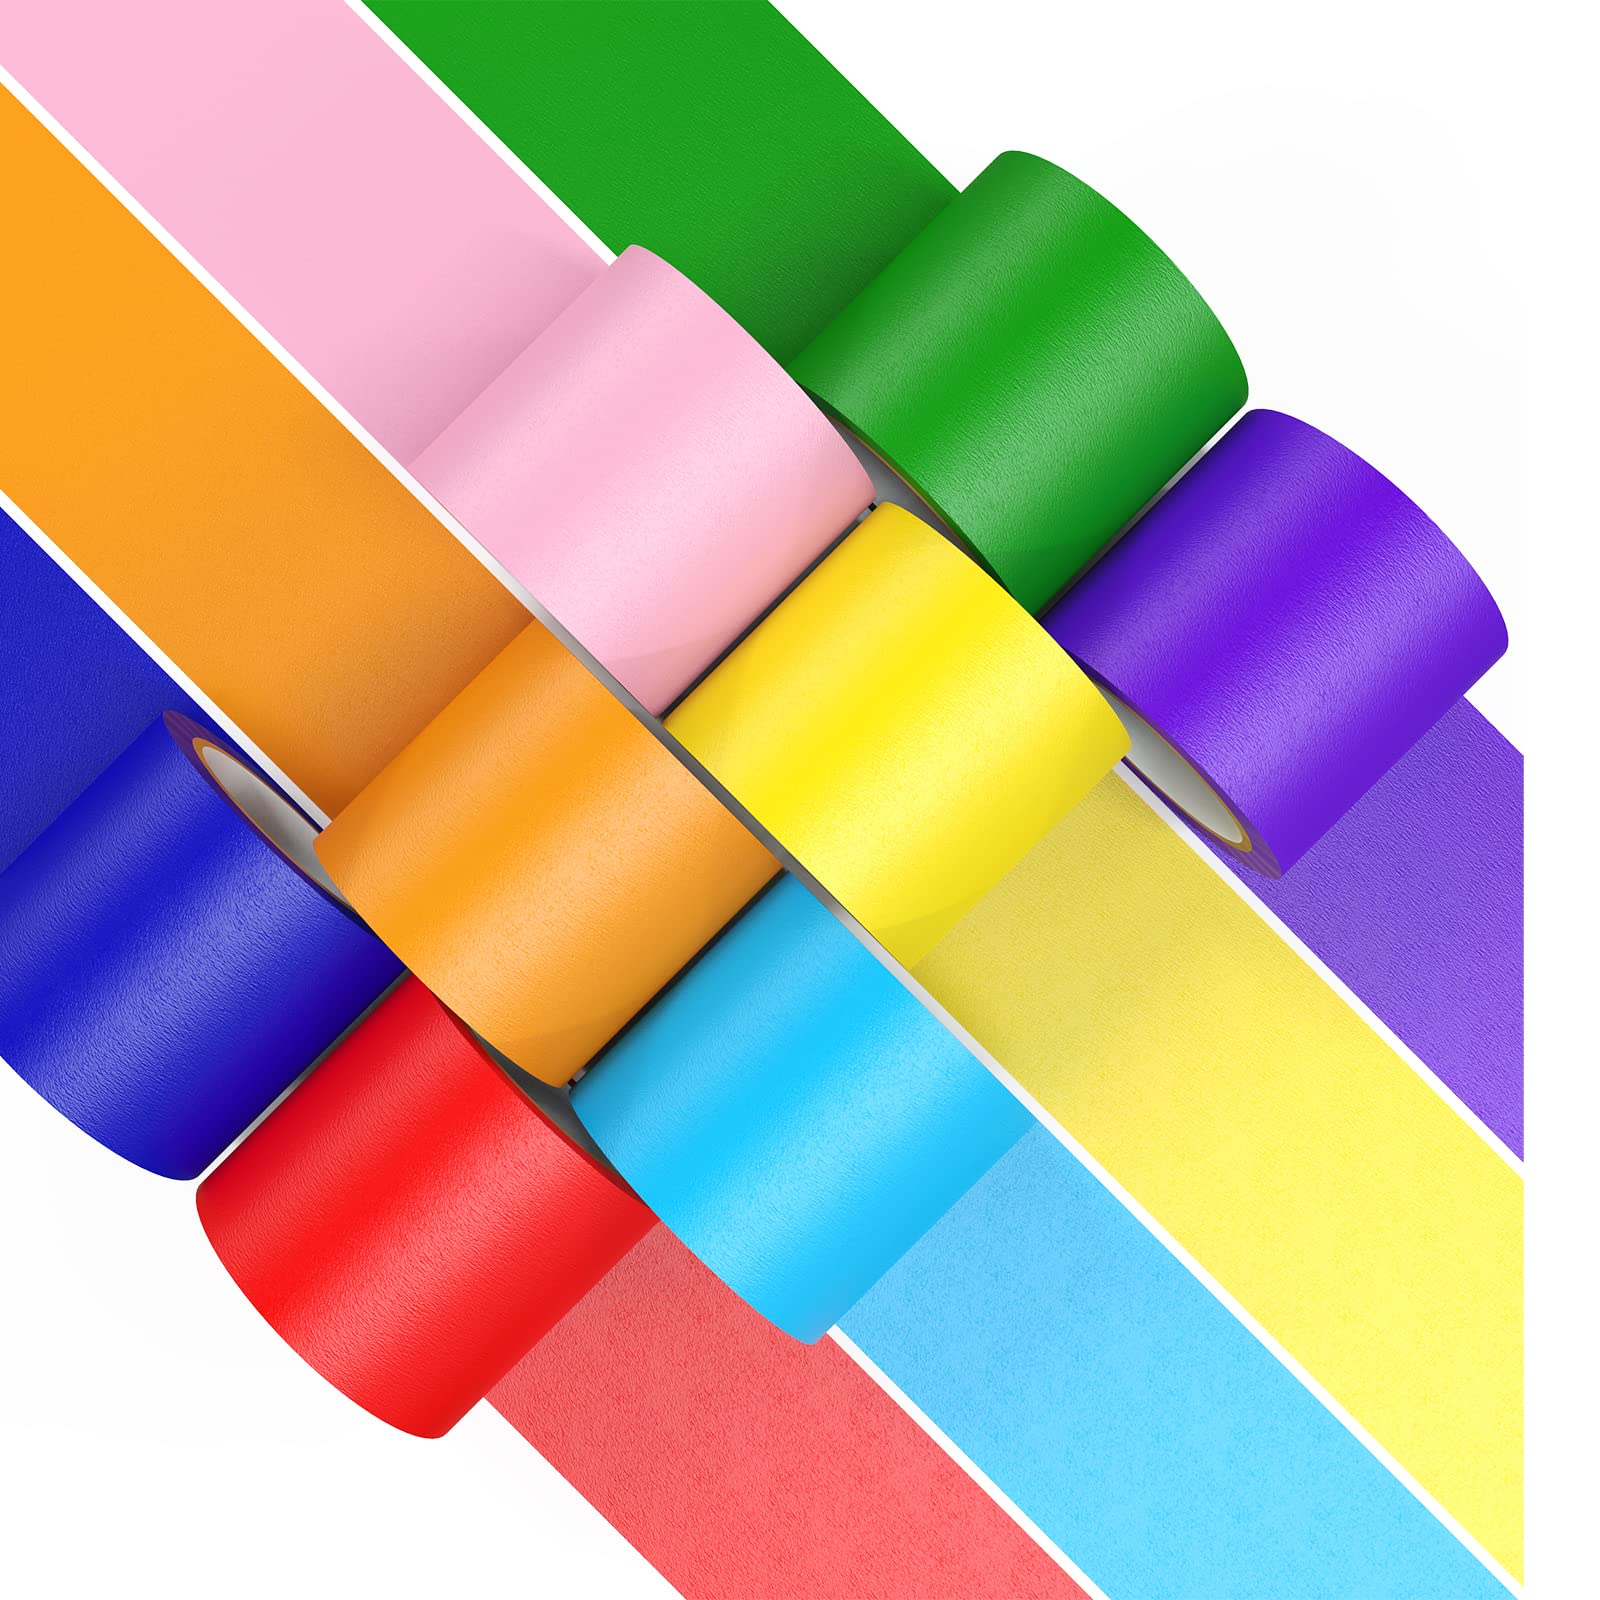 Geometric Rainbow Art using Masking Tape